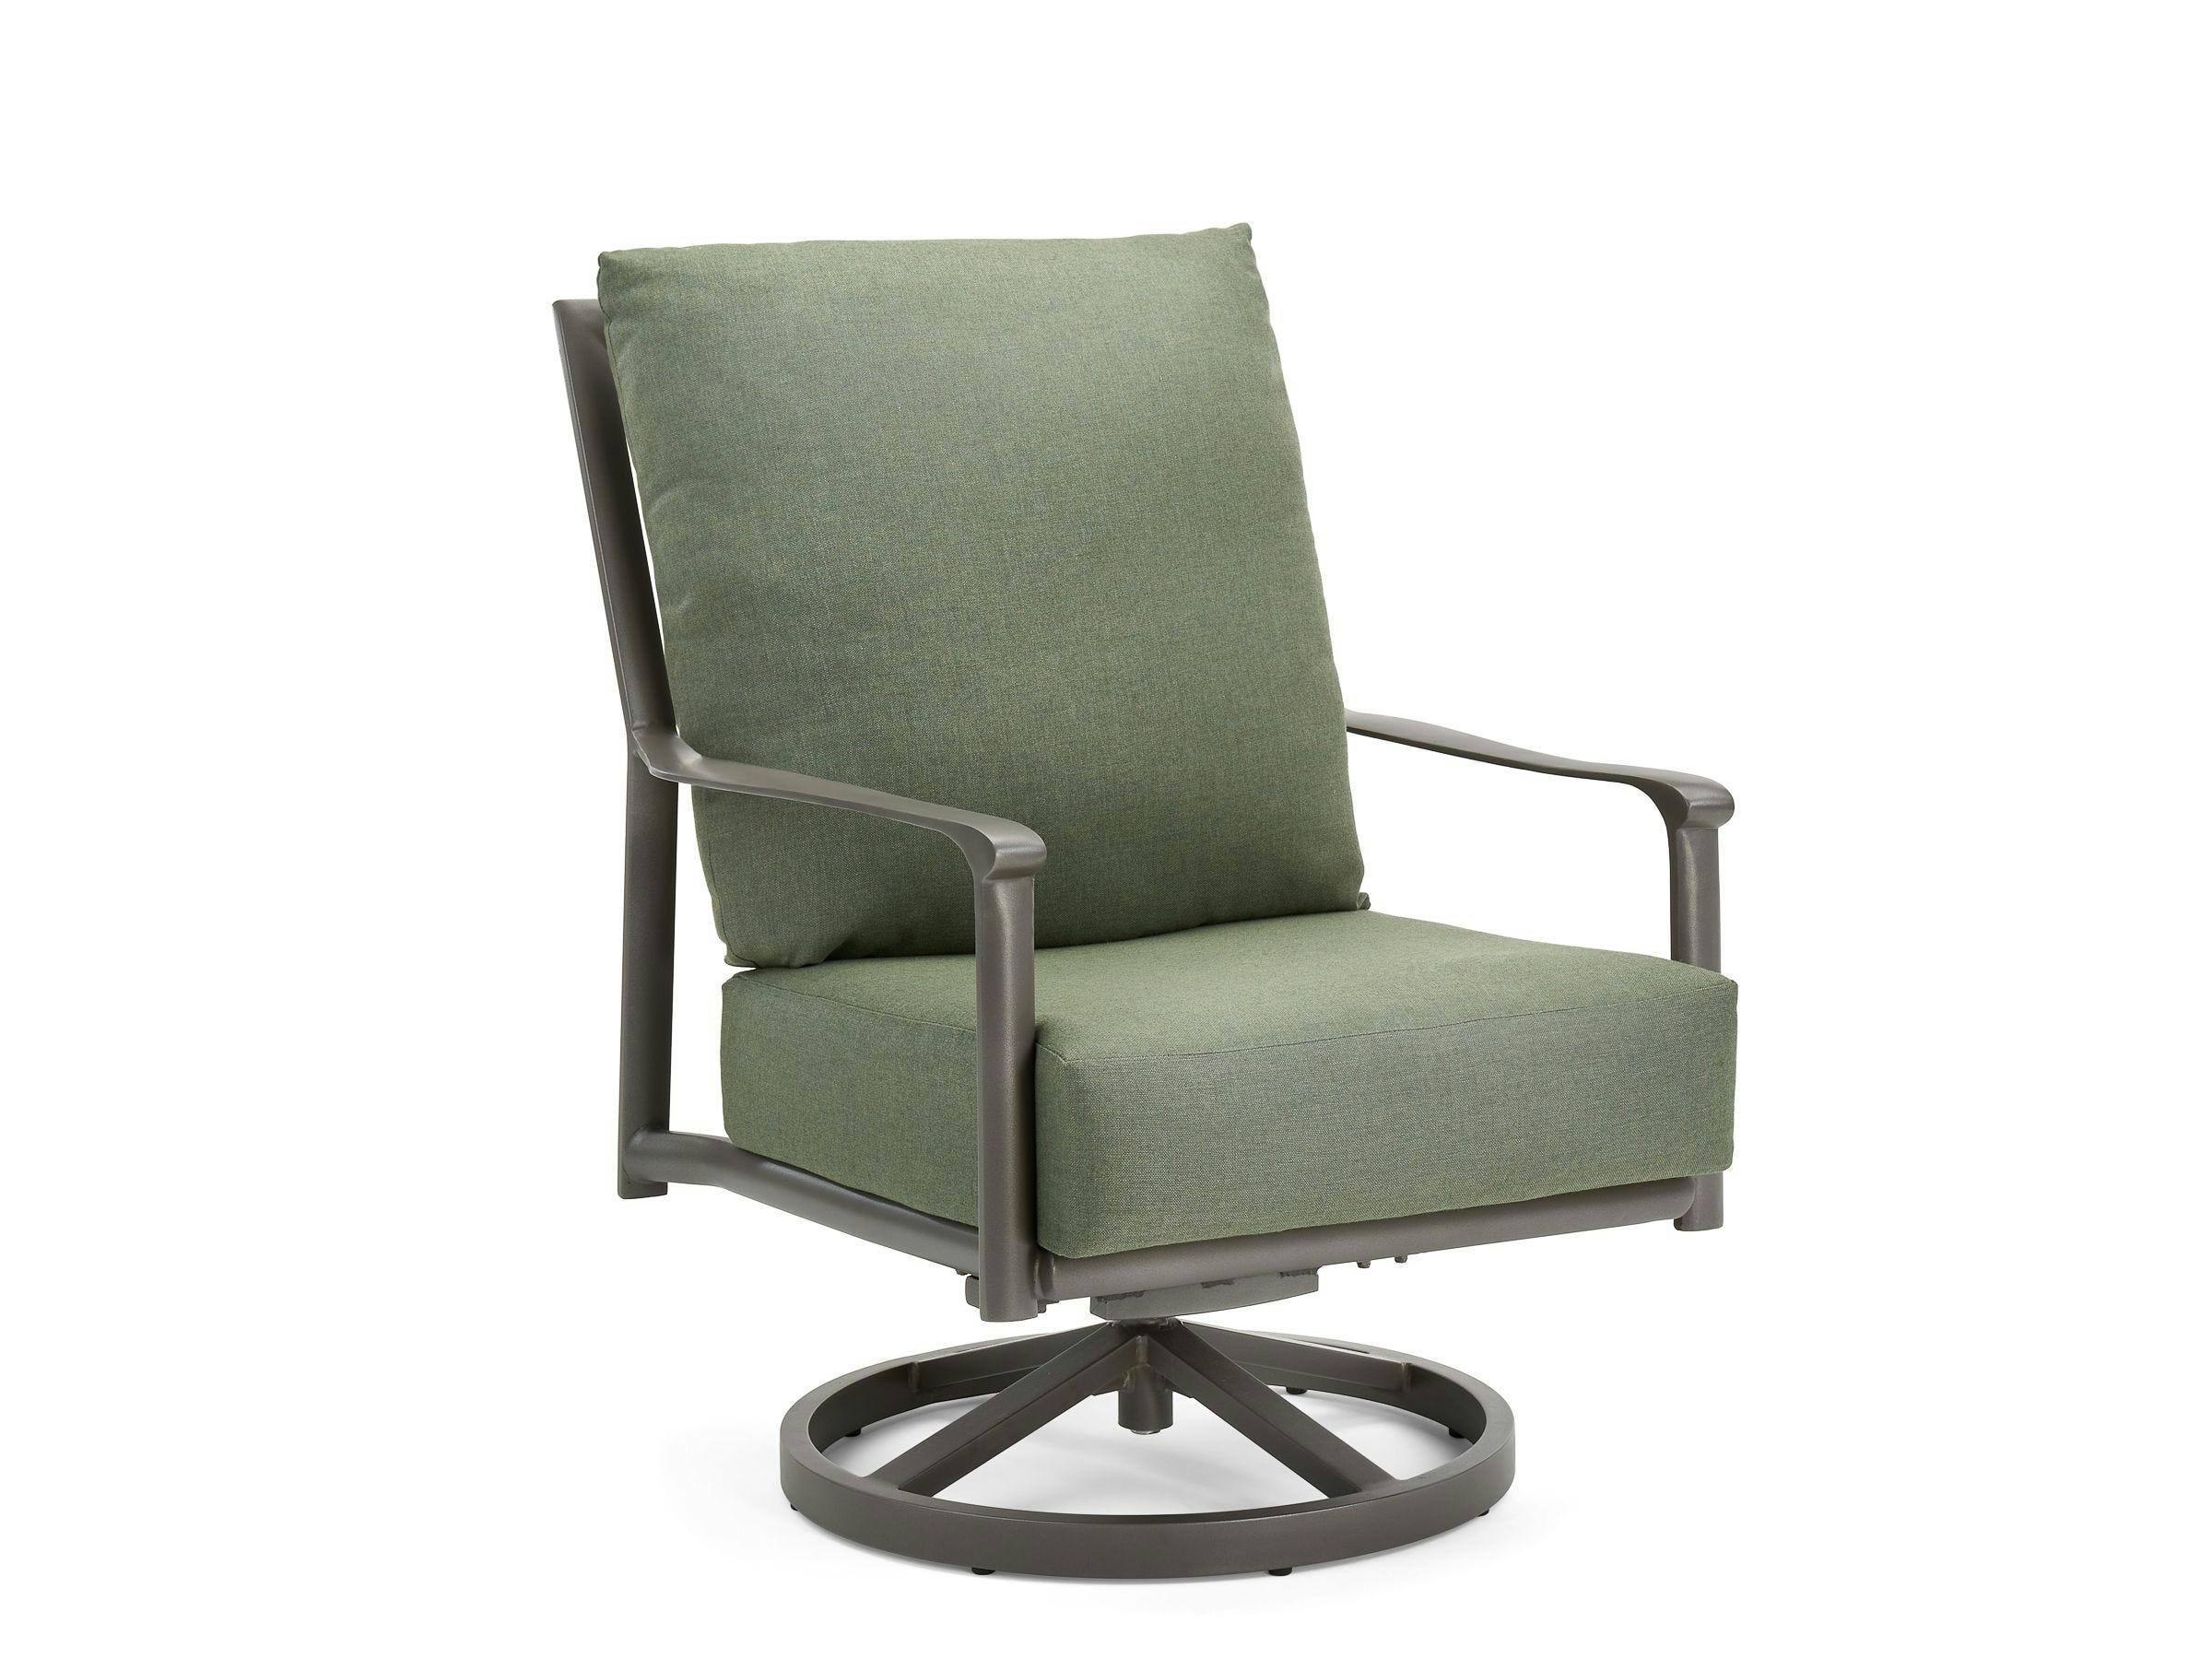 Aspen Cushion High Back Swivel Rocker Lounge Chair